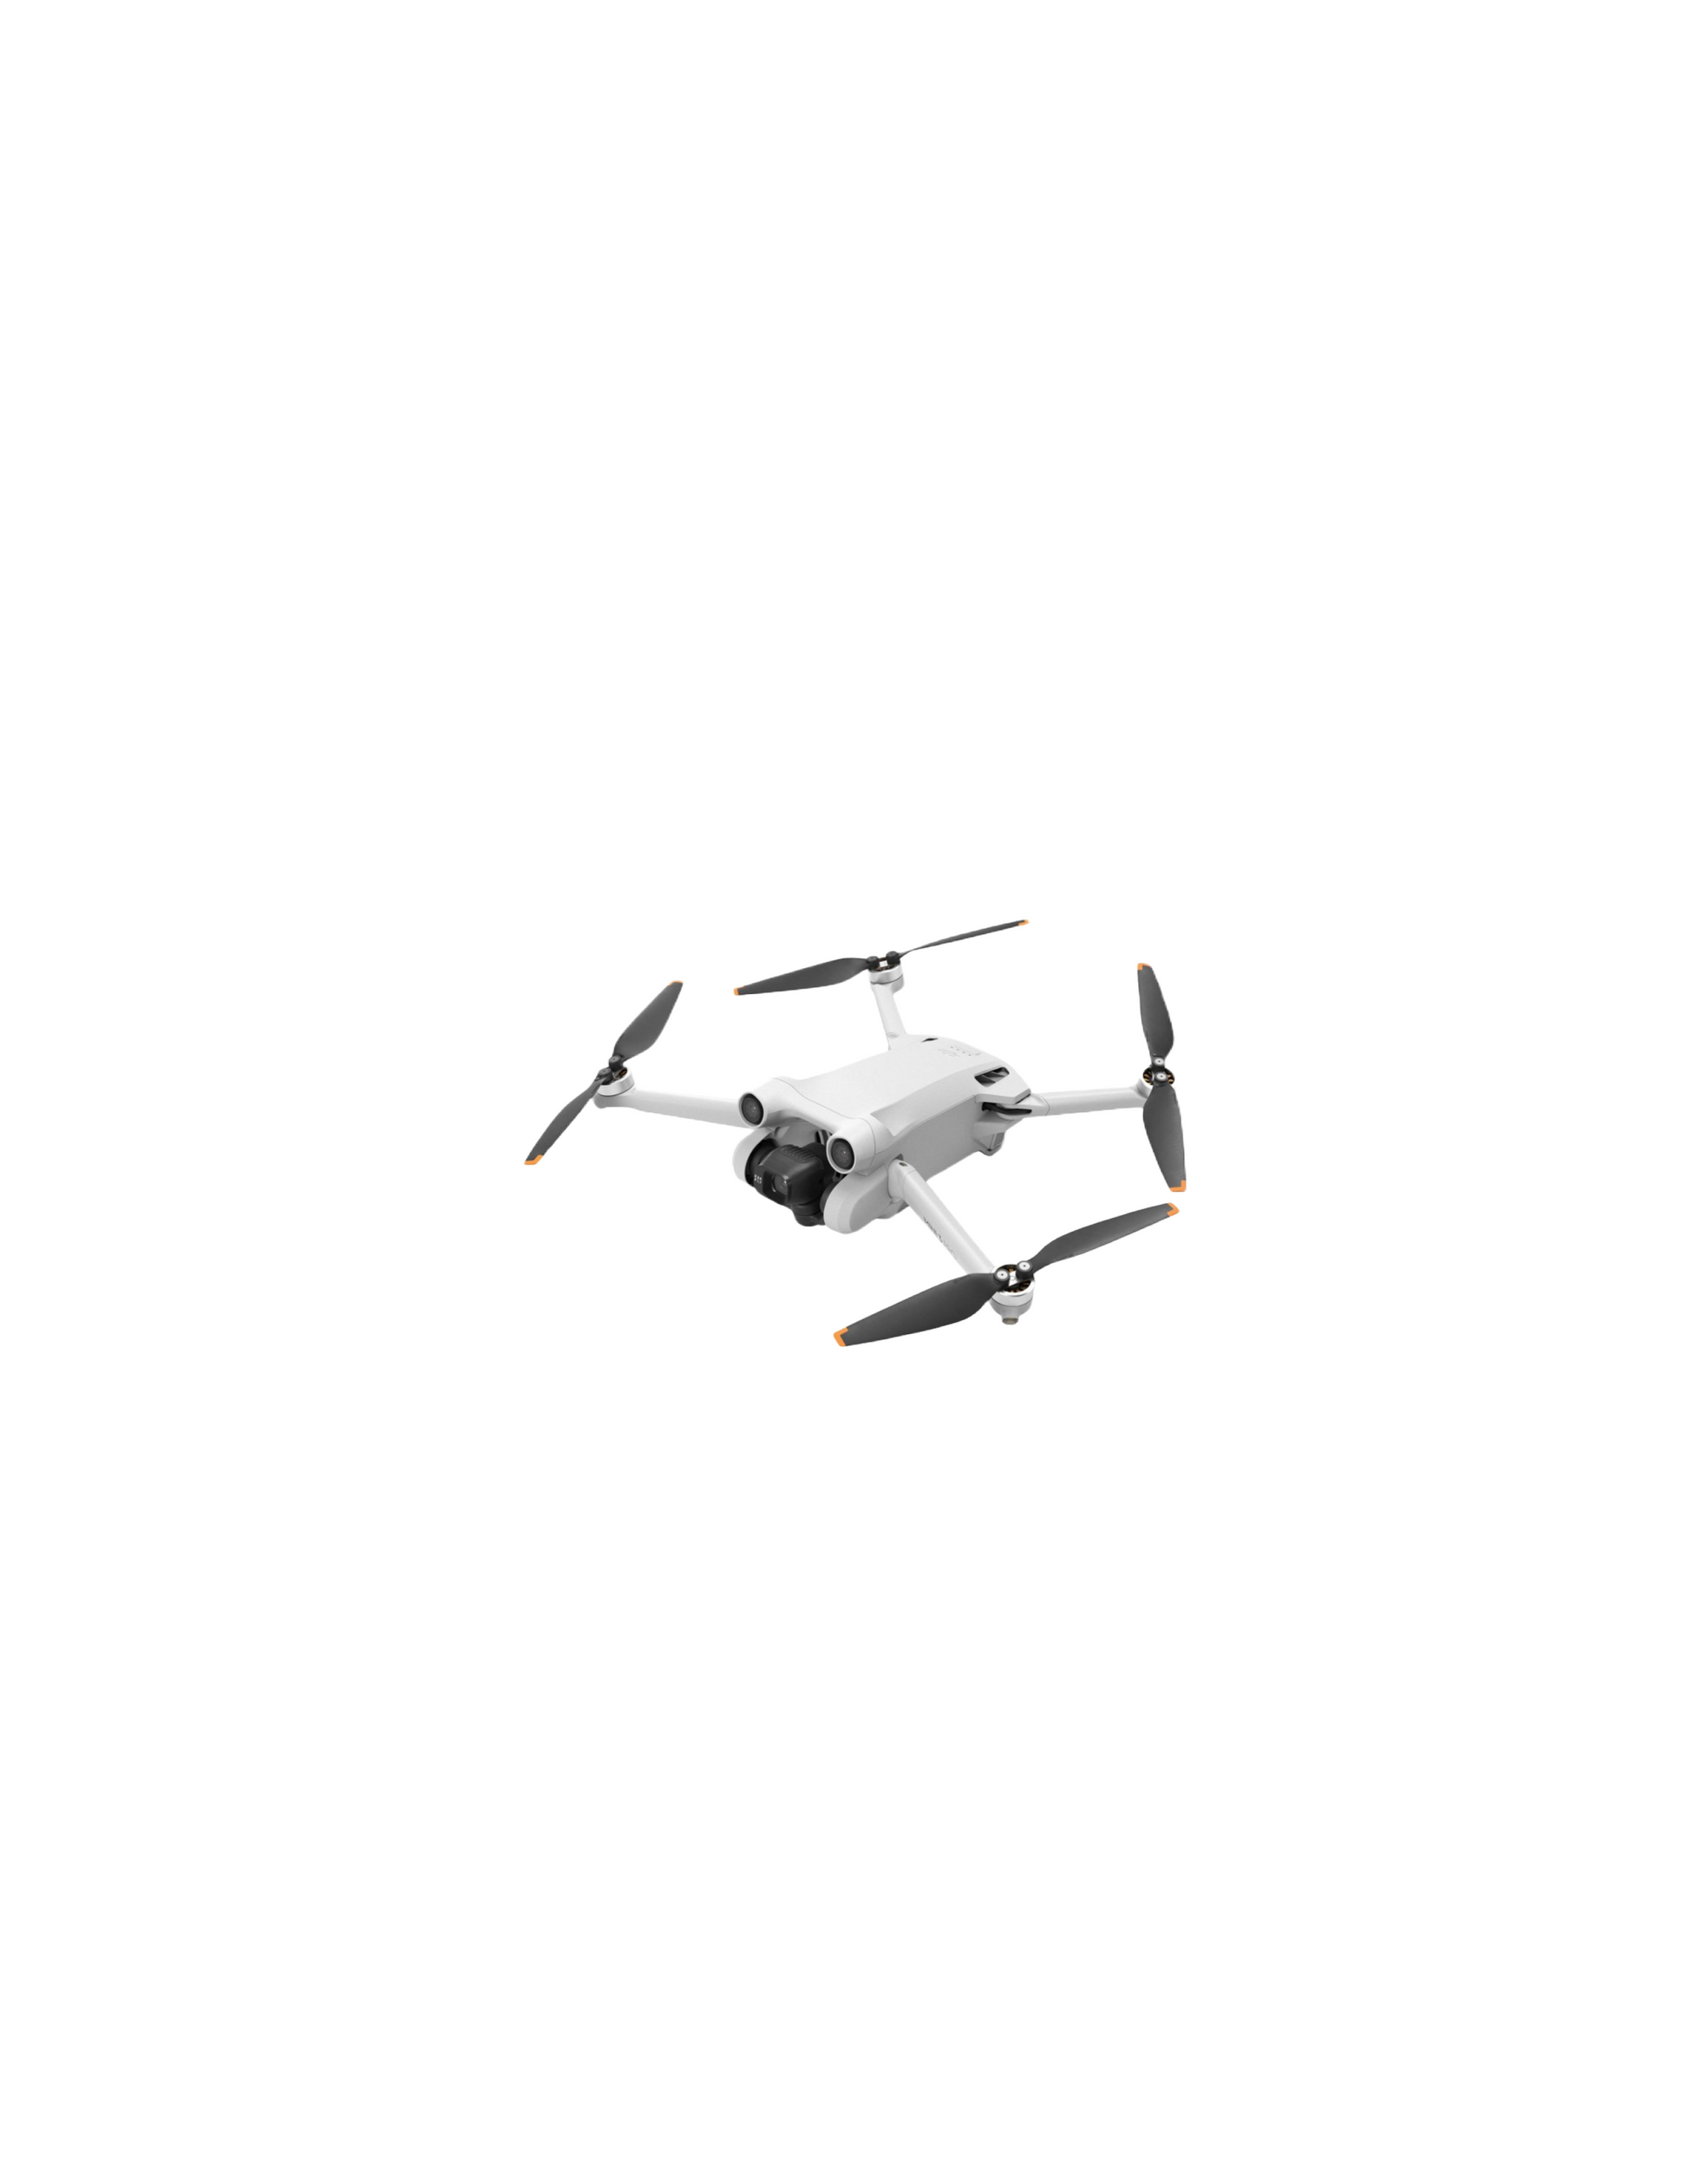 DJI Mini 3 Pro Drone and Remote Control with Built-in Screen (DJI